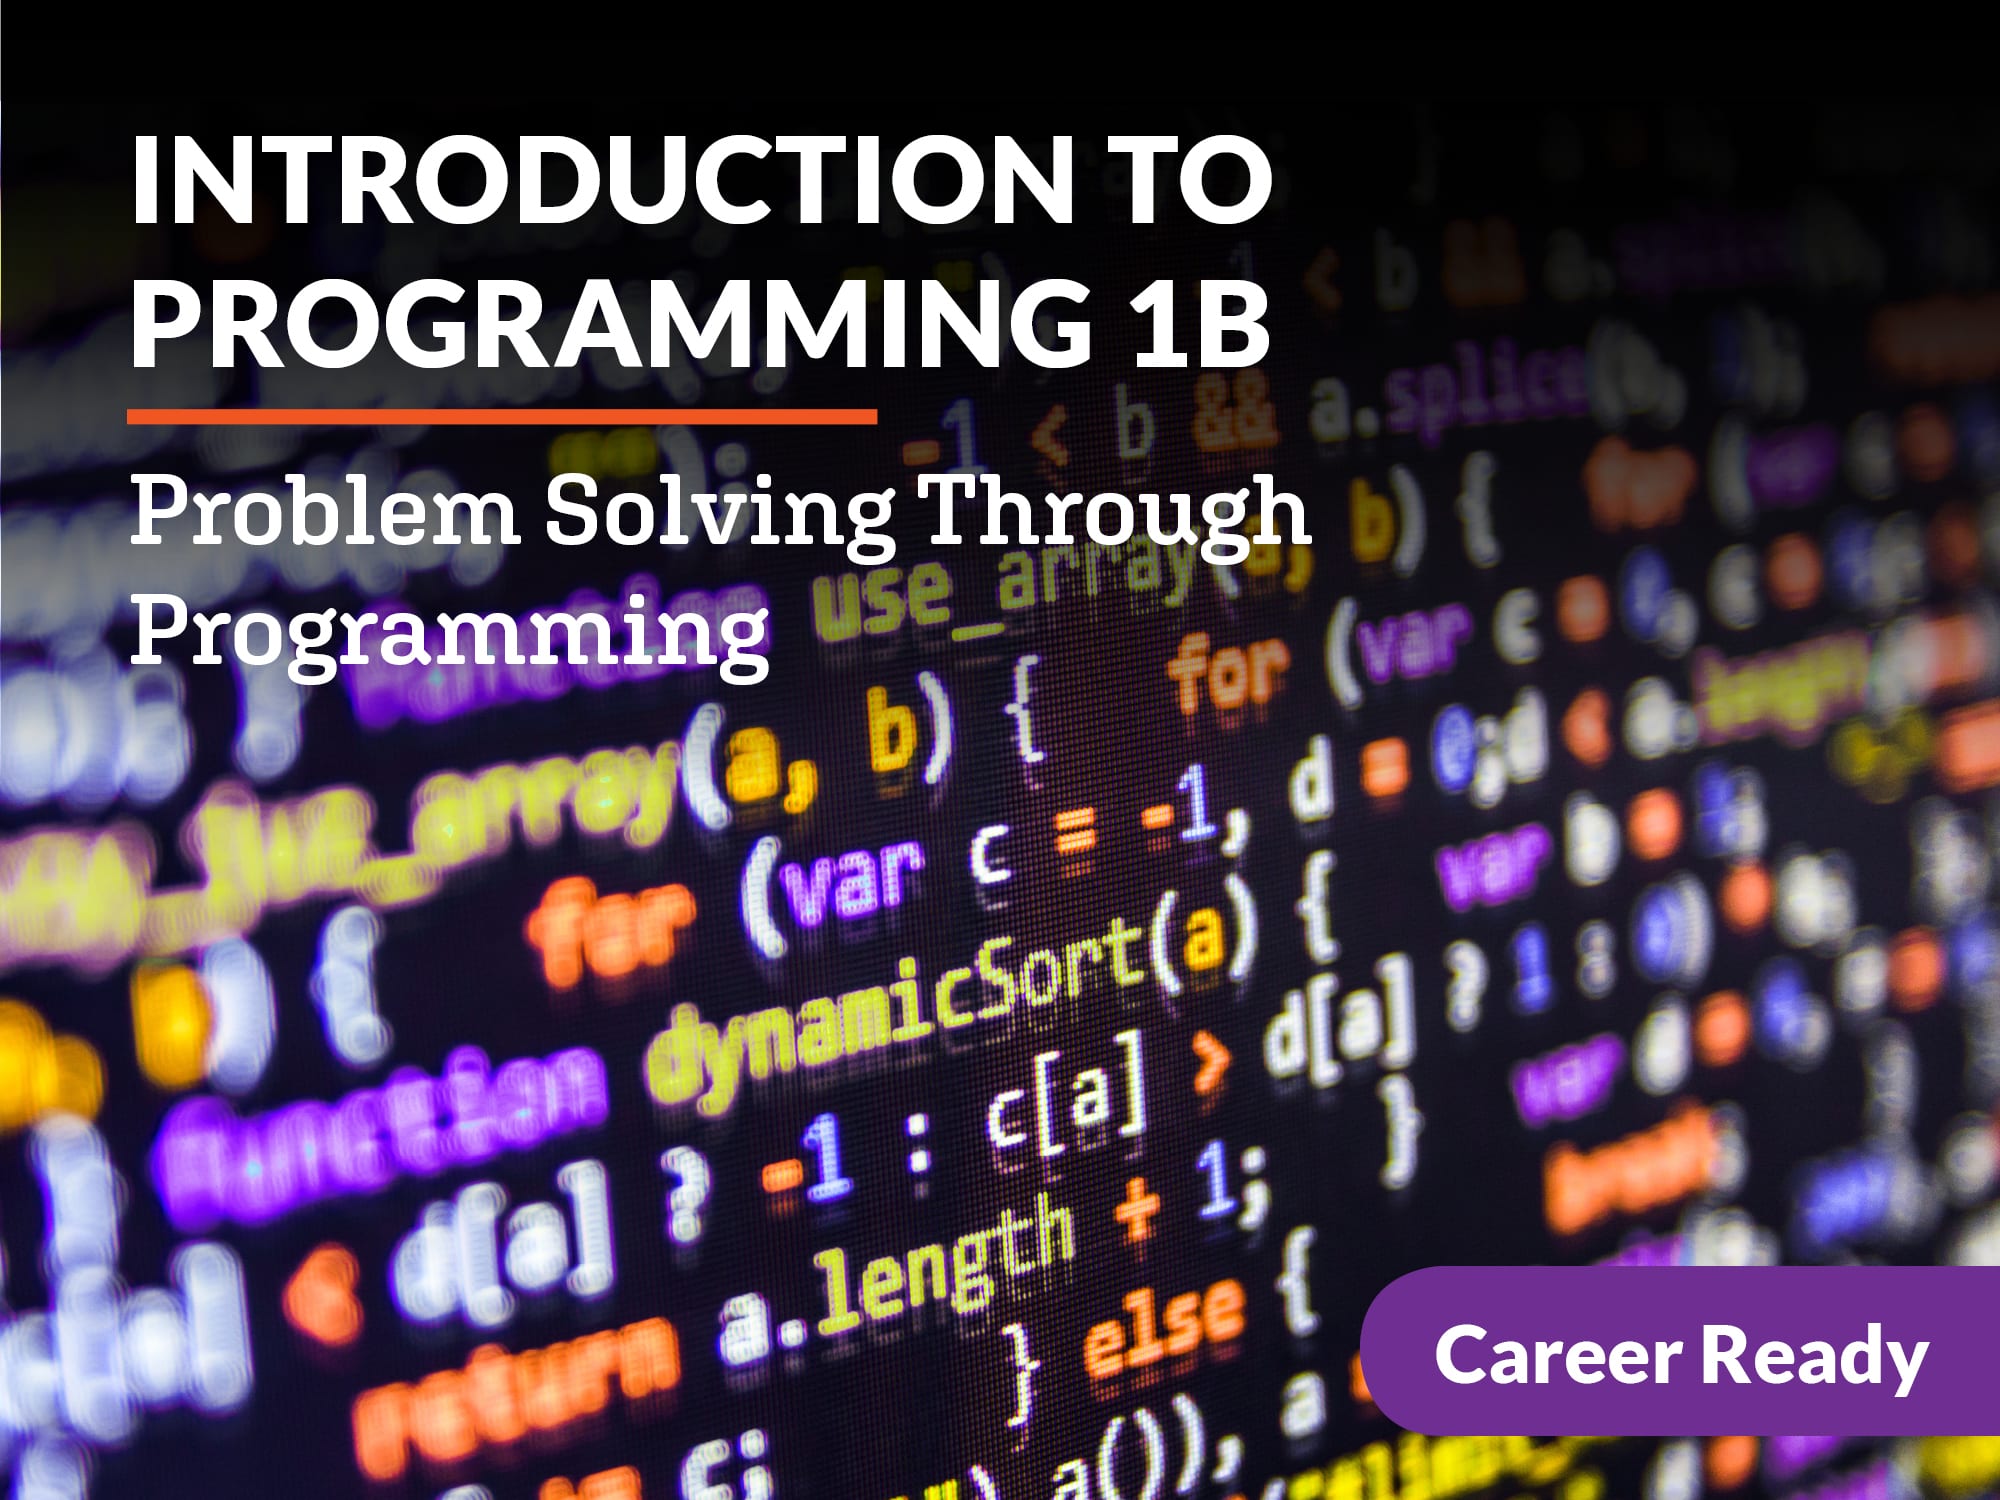 eDL Introduction to Programming 1b: Problem Solving Through Programming 1B